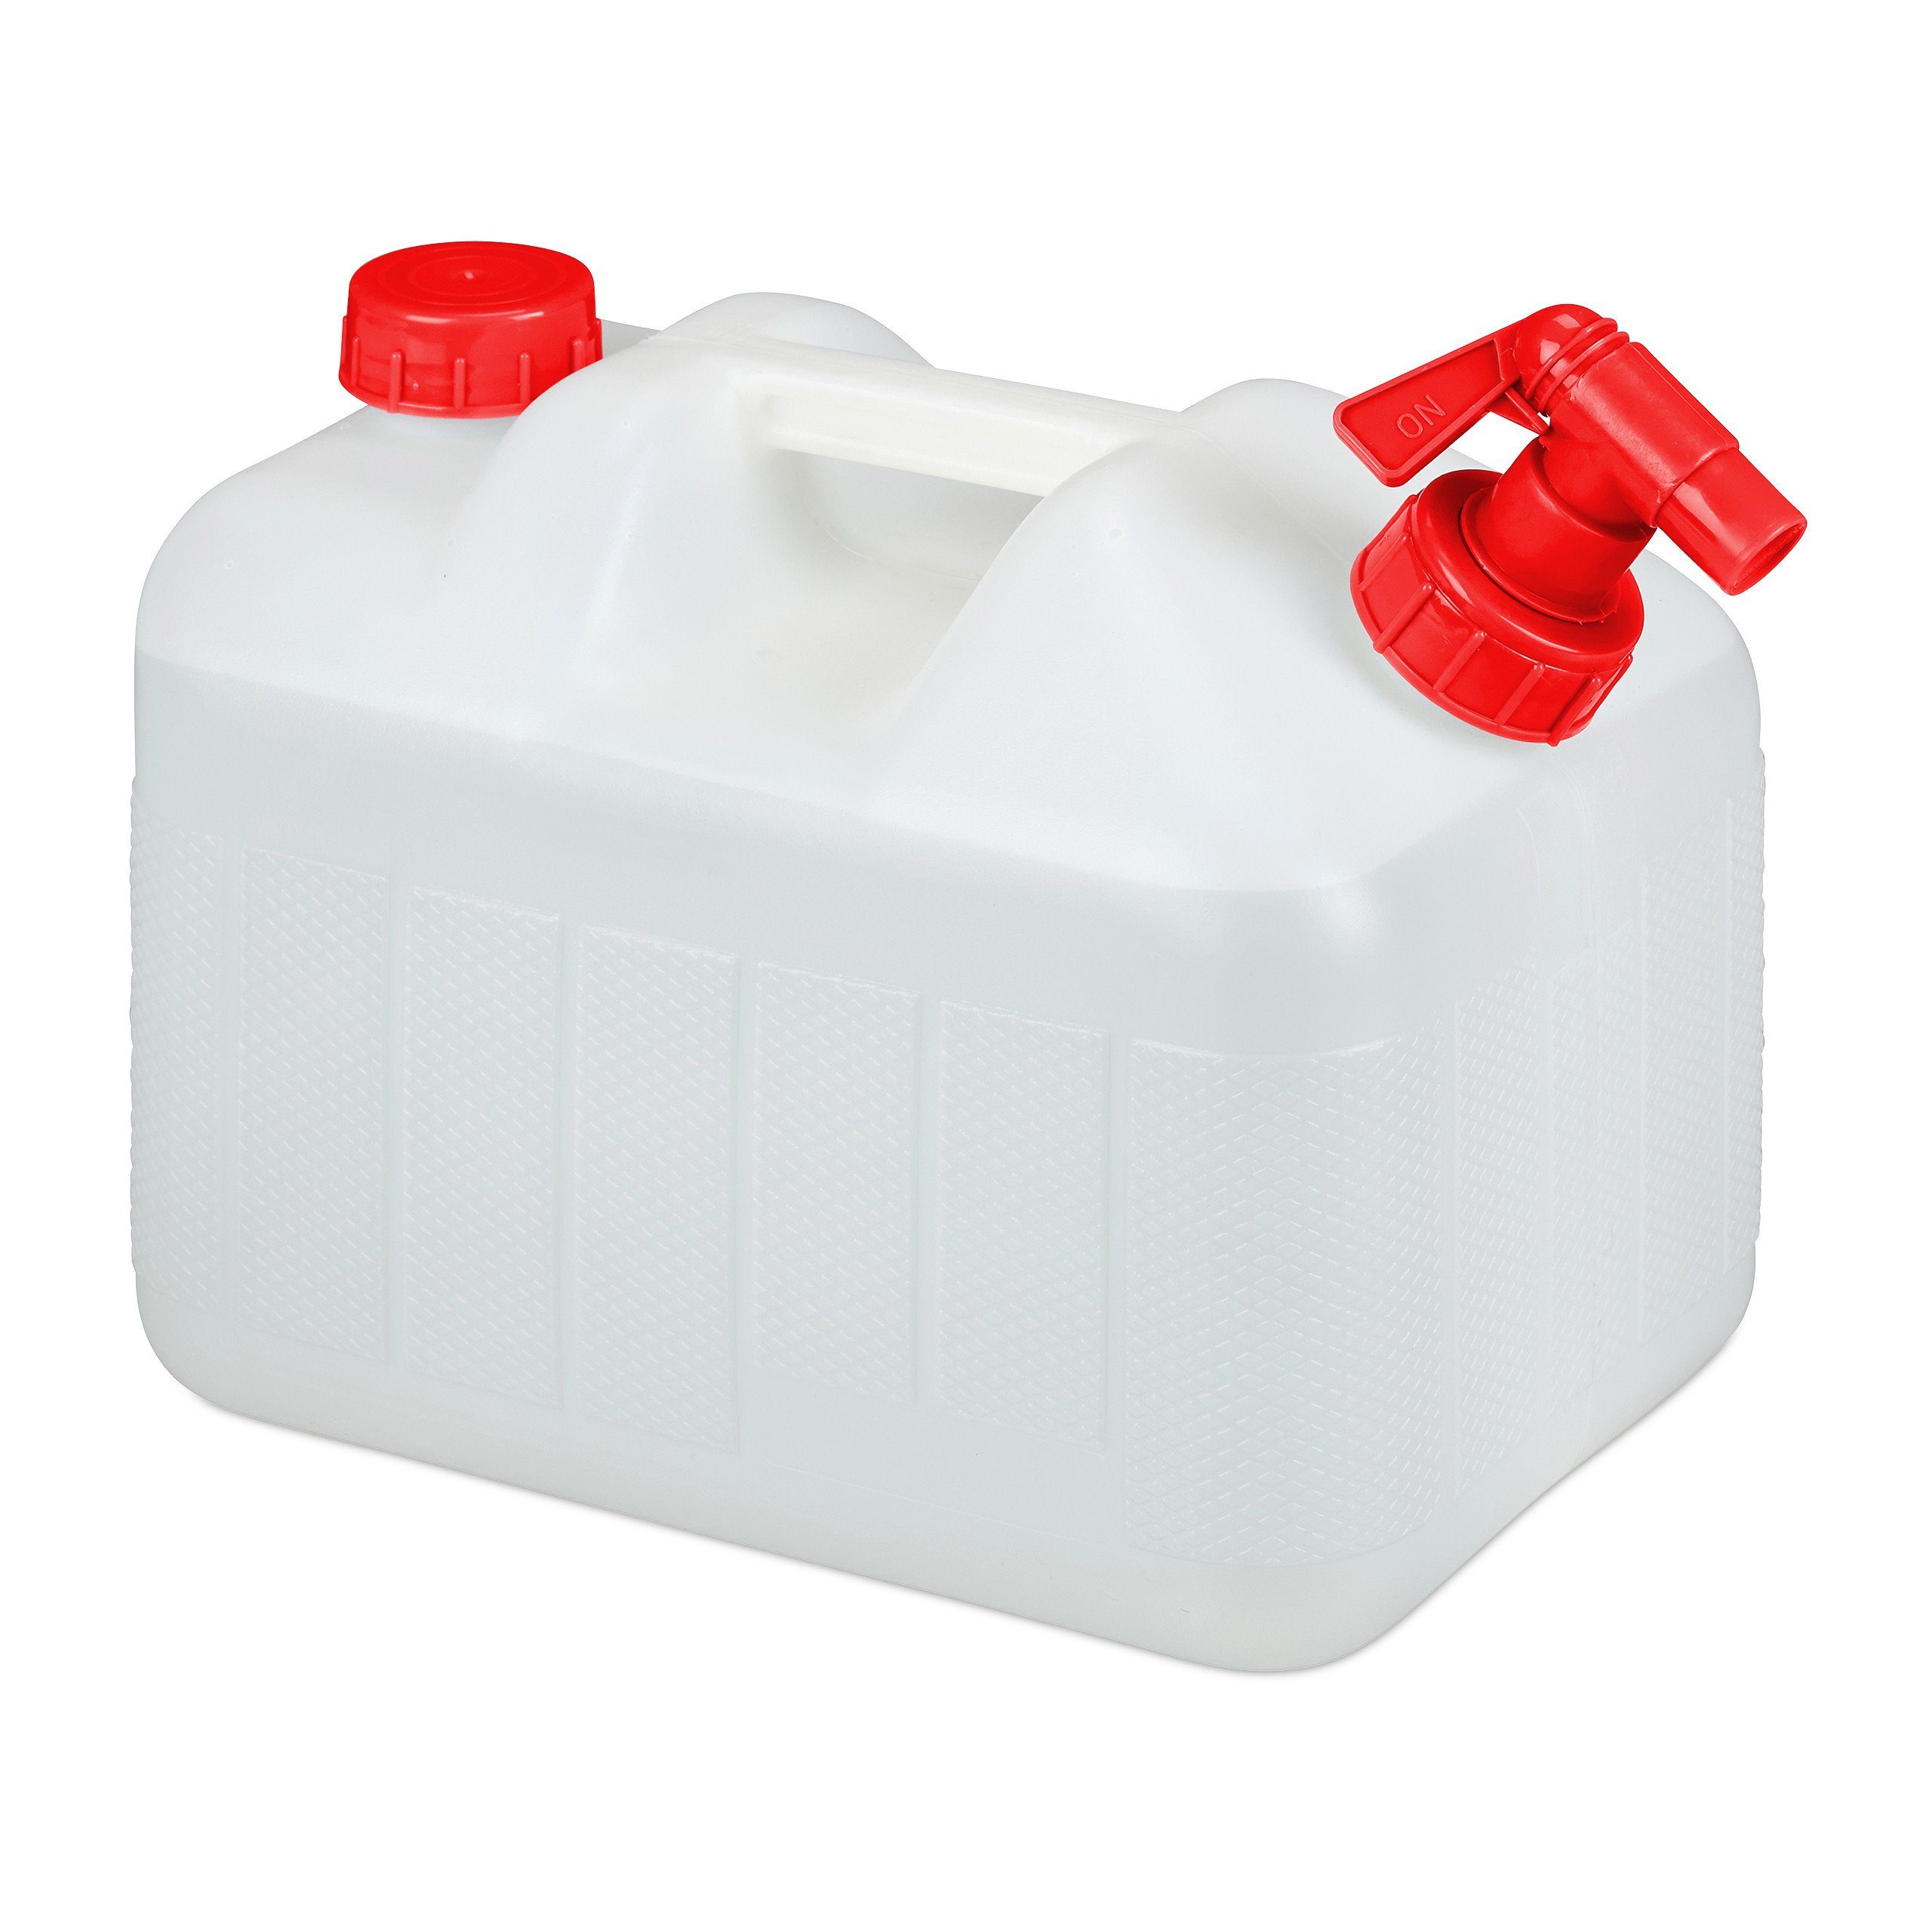 relaxdays Kanister Wasserkanister 10 Liter mit Hahn